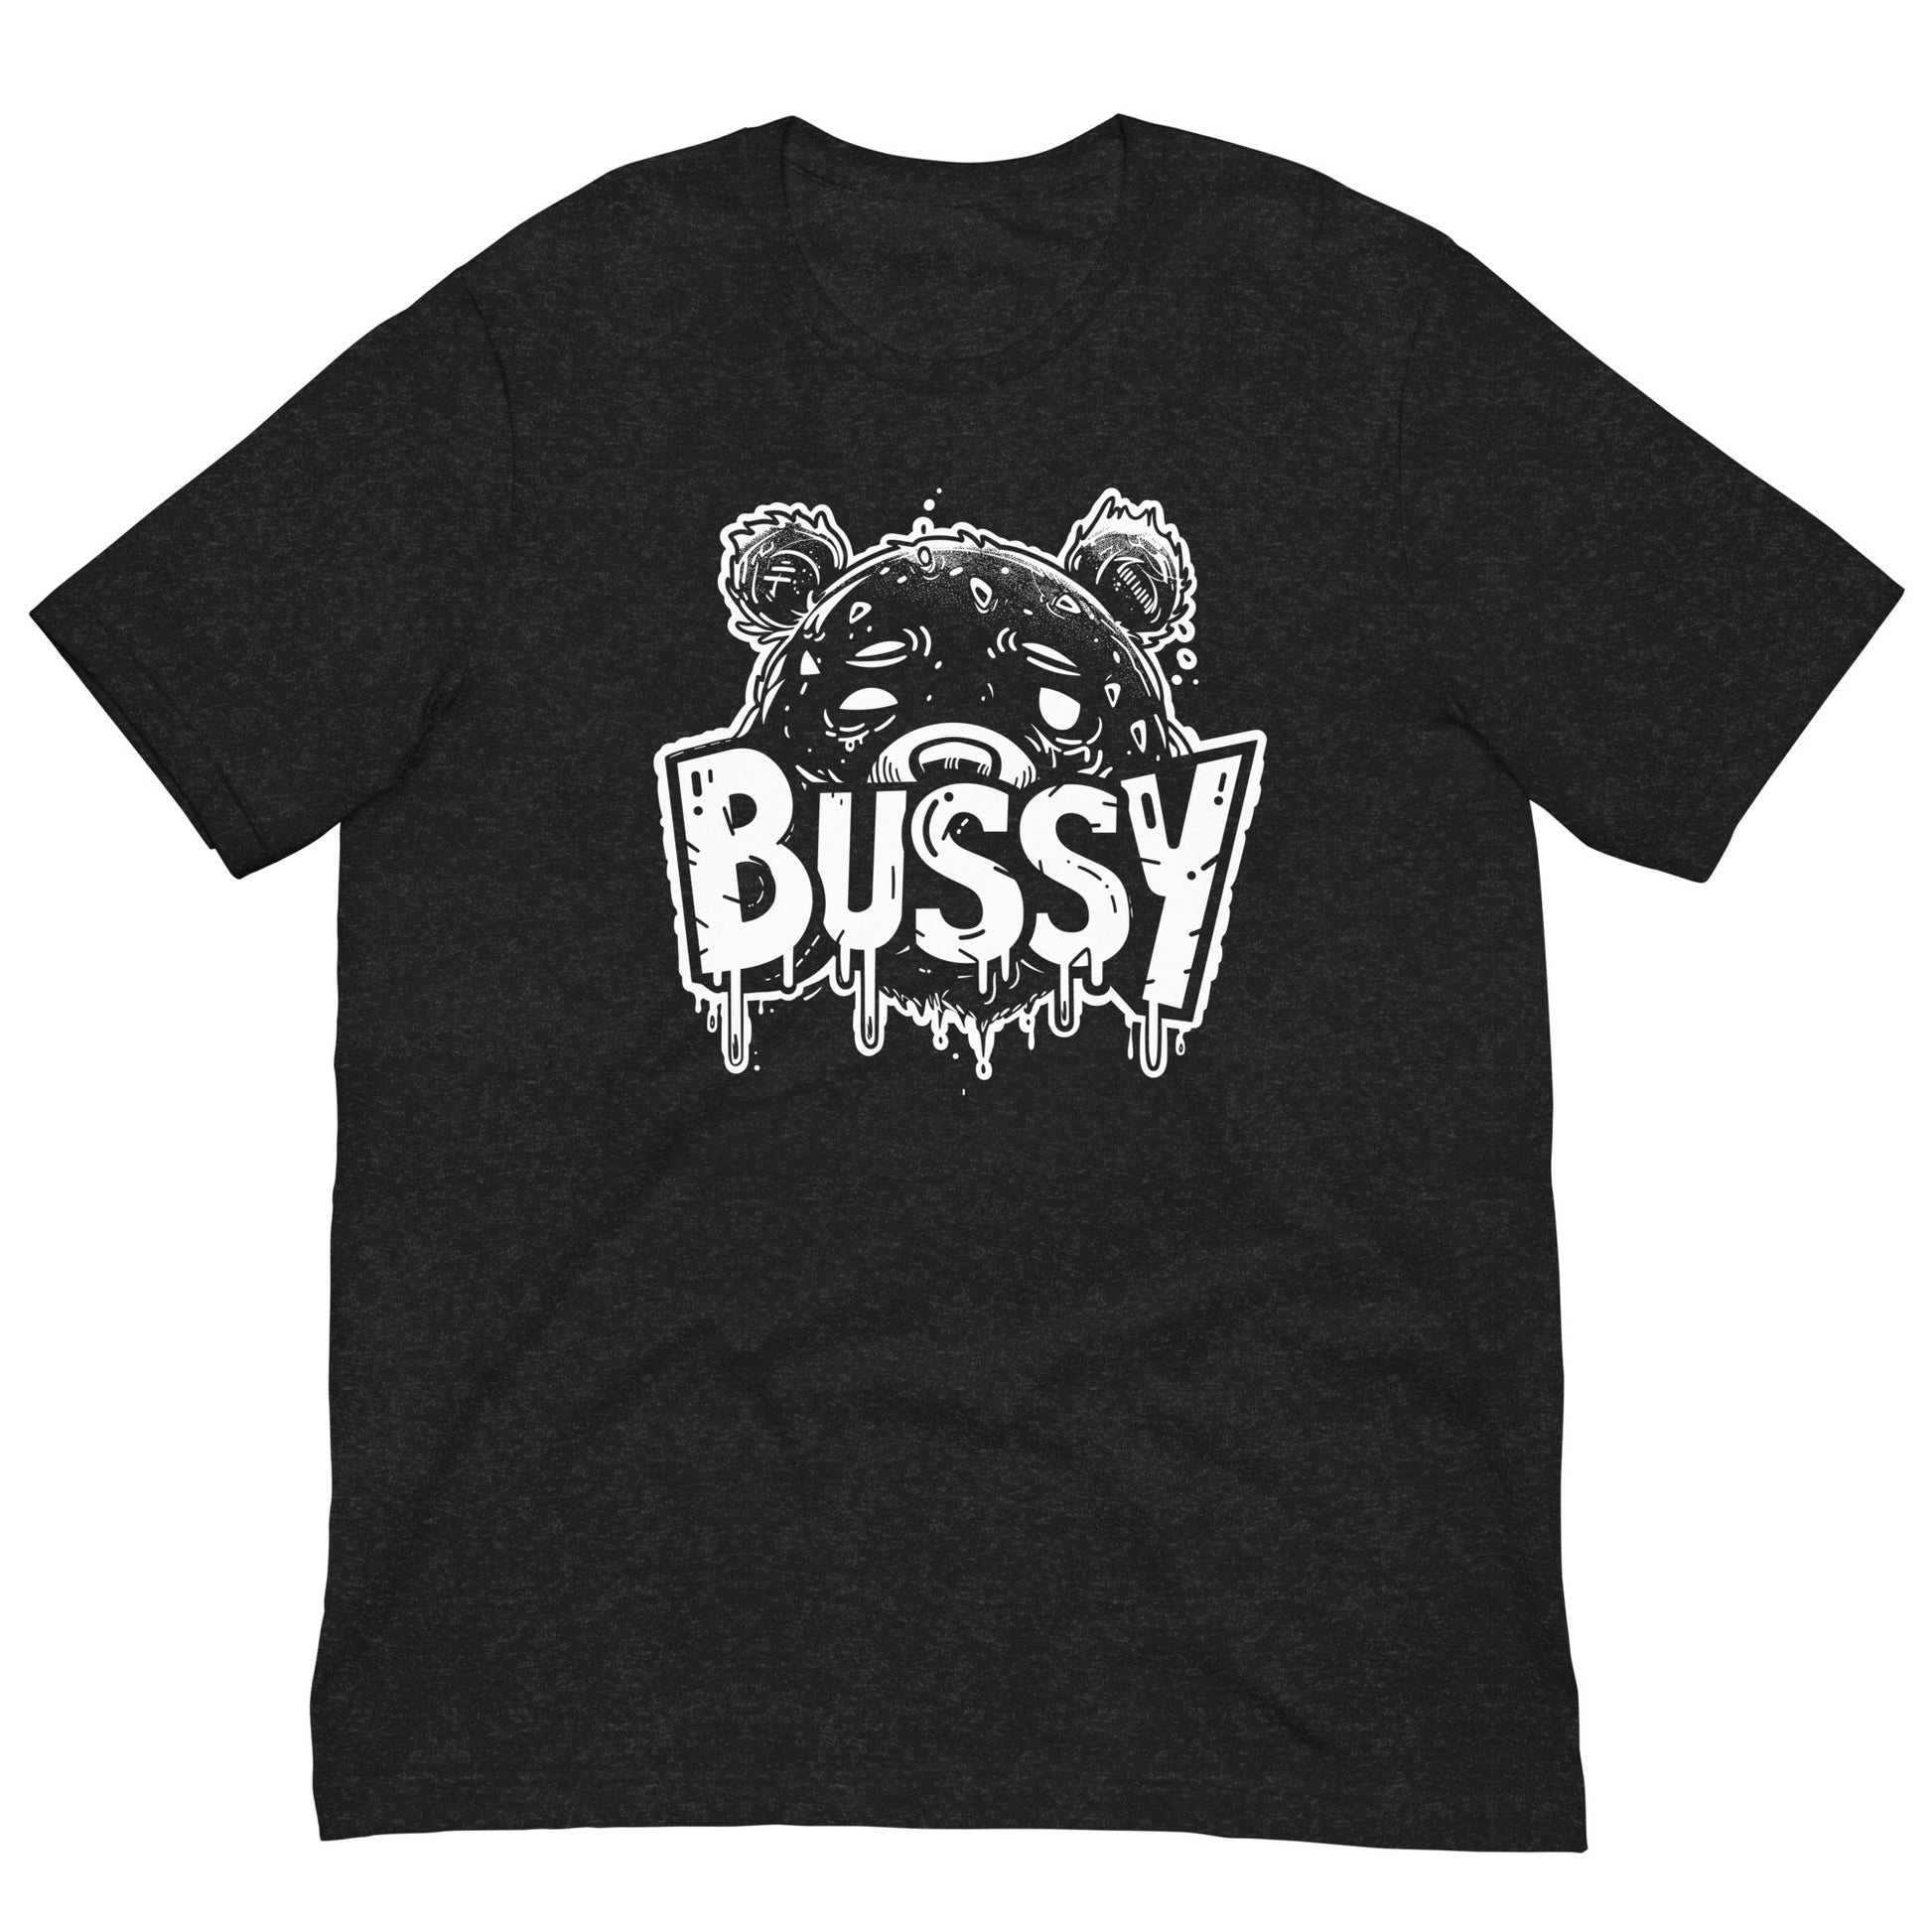 Daring Drip "Bussy", Urban Chic Gay Bear T-Shirt